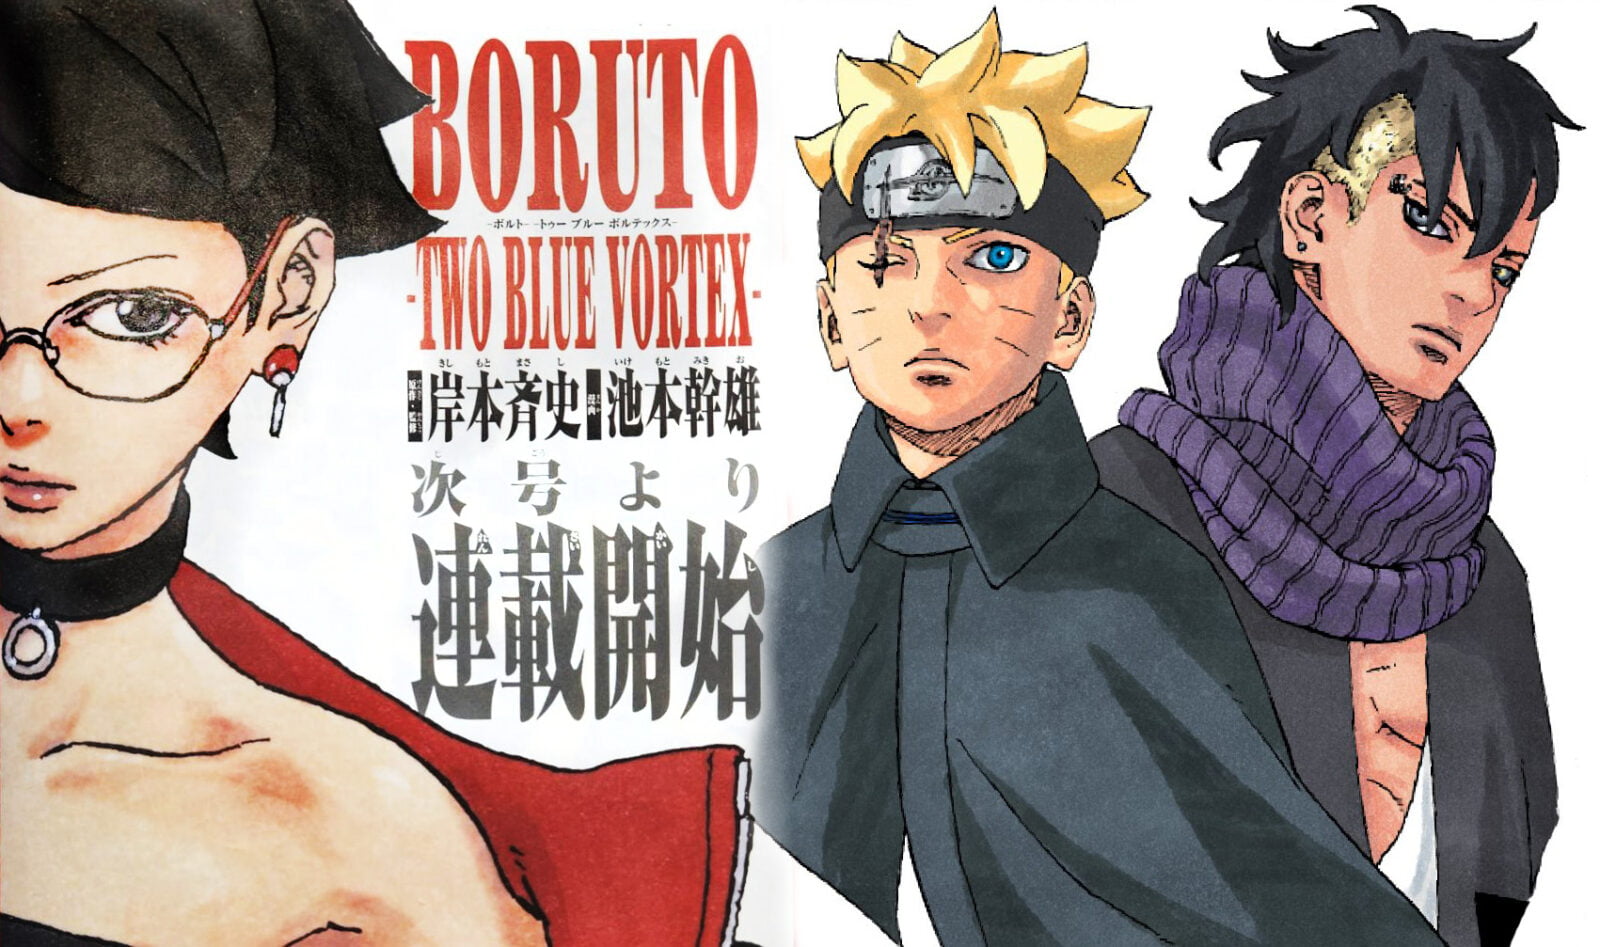 Boruto: Two Blue Vortex (Manga Part 2) main character designs revealed. |  ResetEra